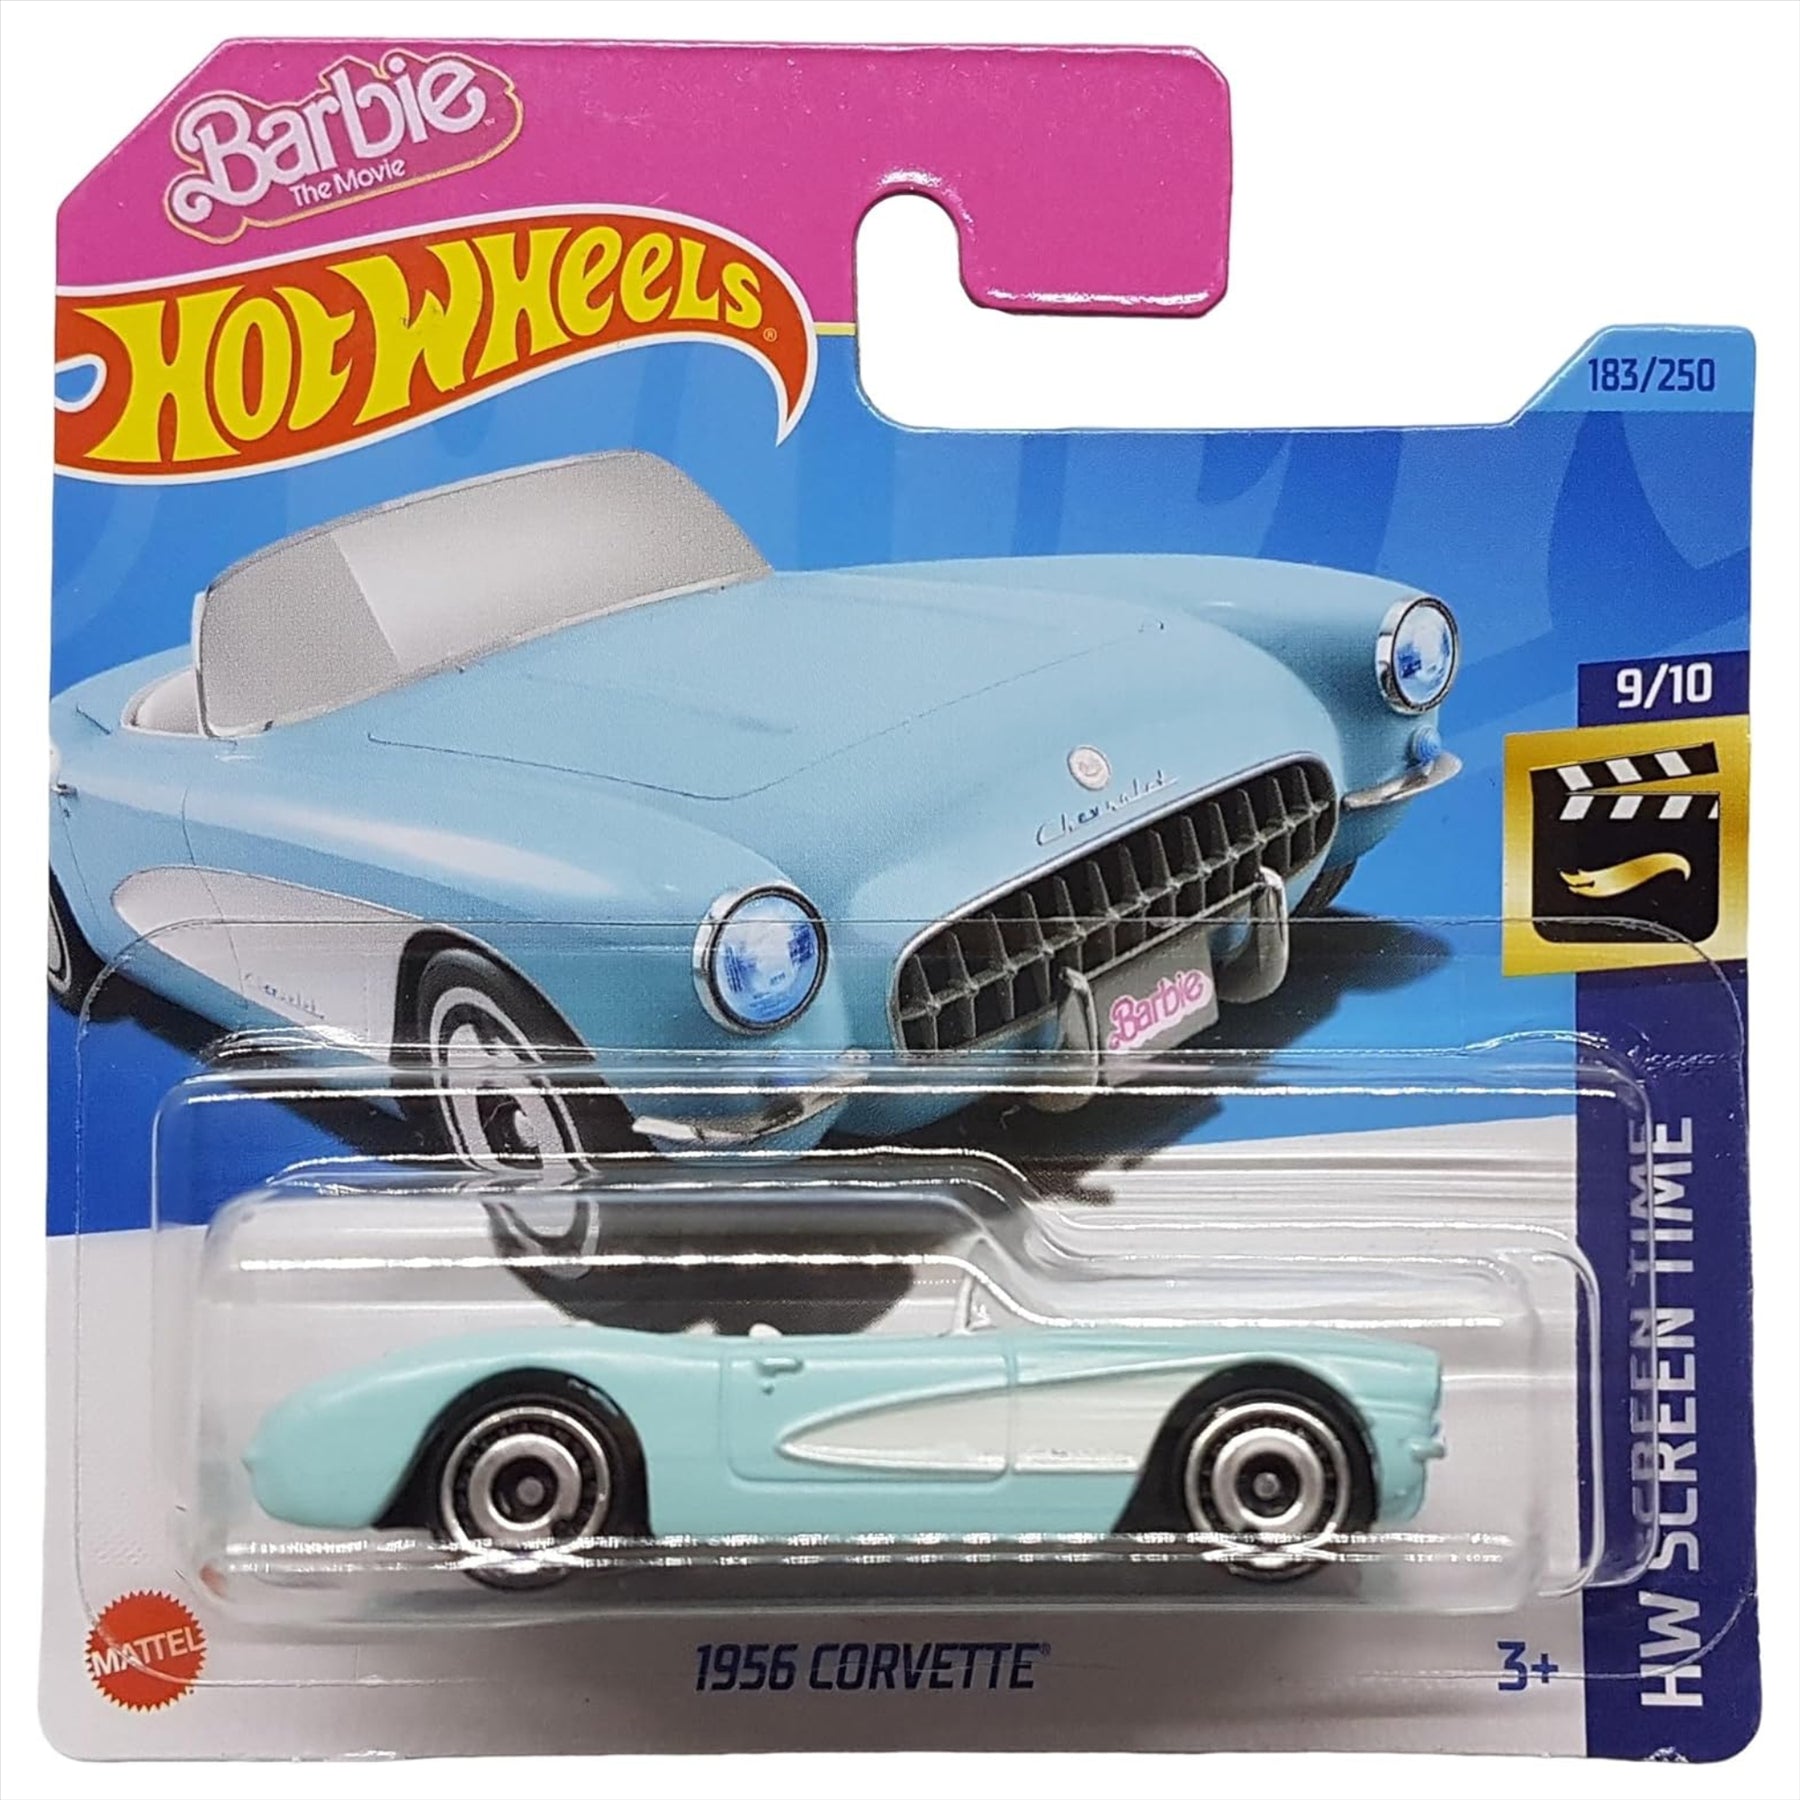 Hot Wheels HW Screen Time Barbie 1956 Corvette 1:64 Scale Diecast Model Car 9/10 - Toptoys2u